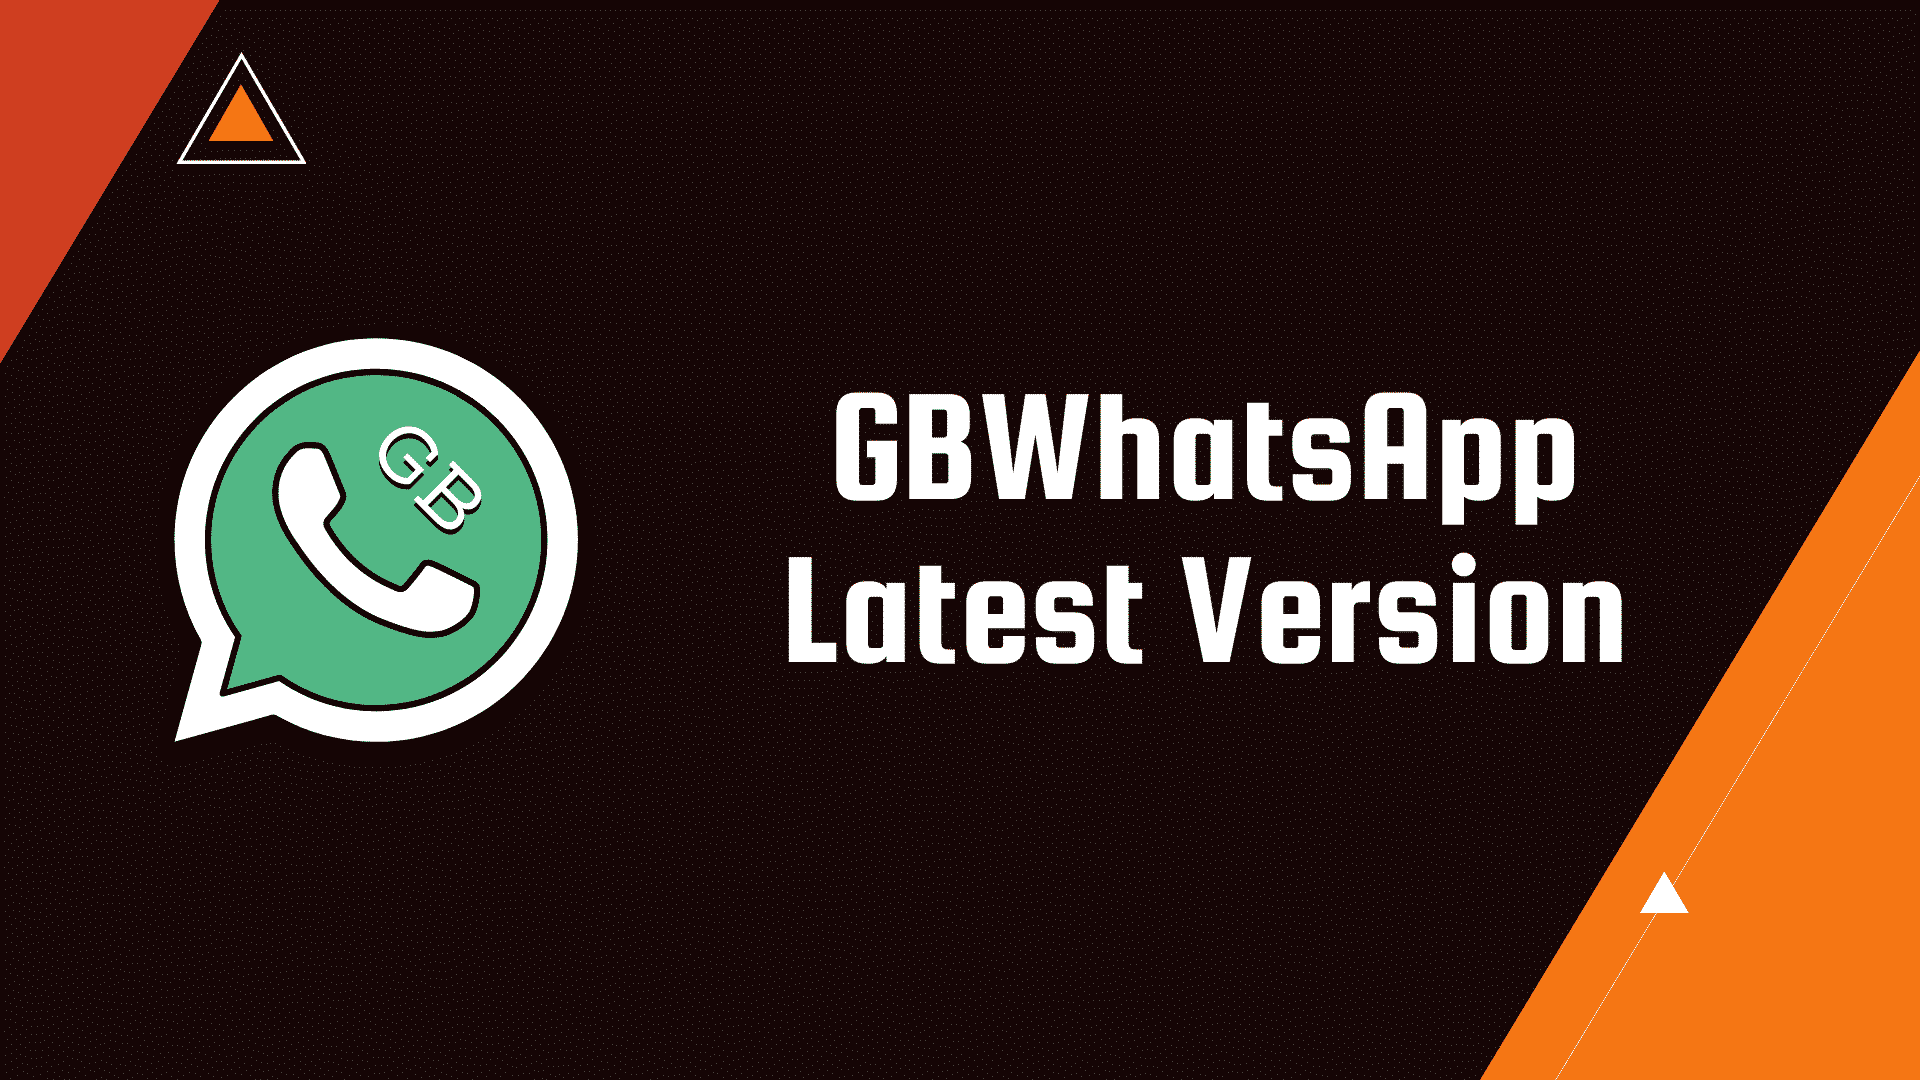 gbwhatsapp version 6.70